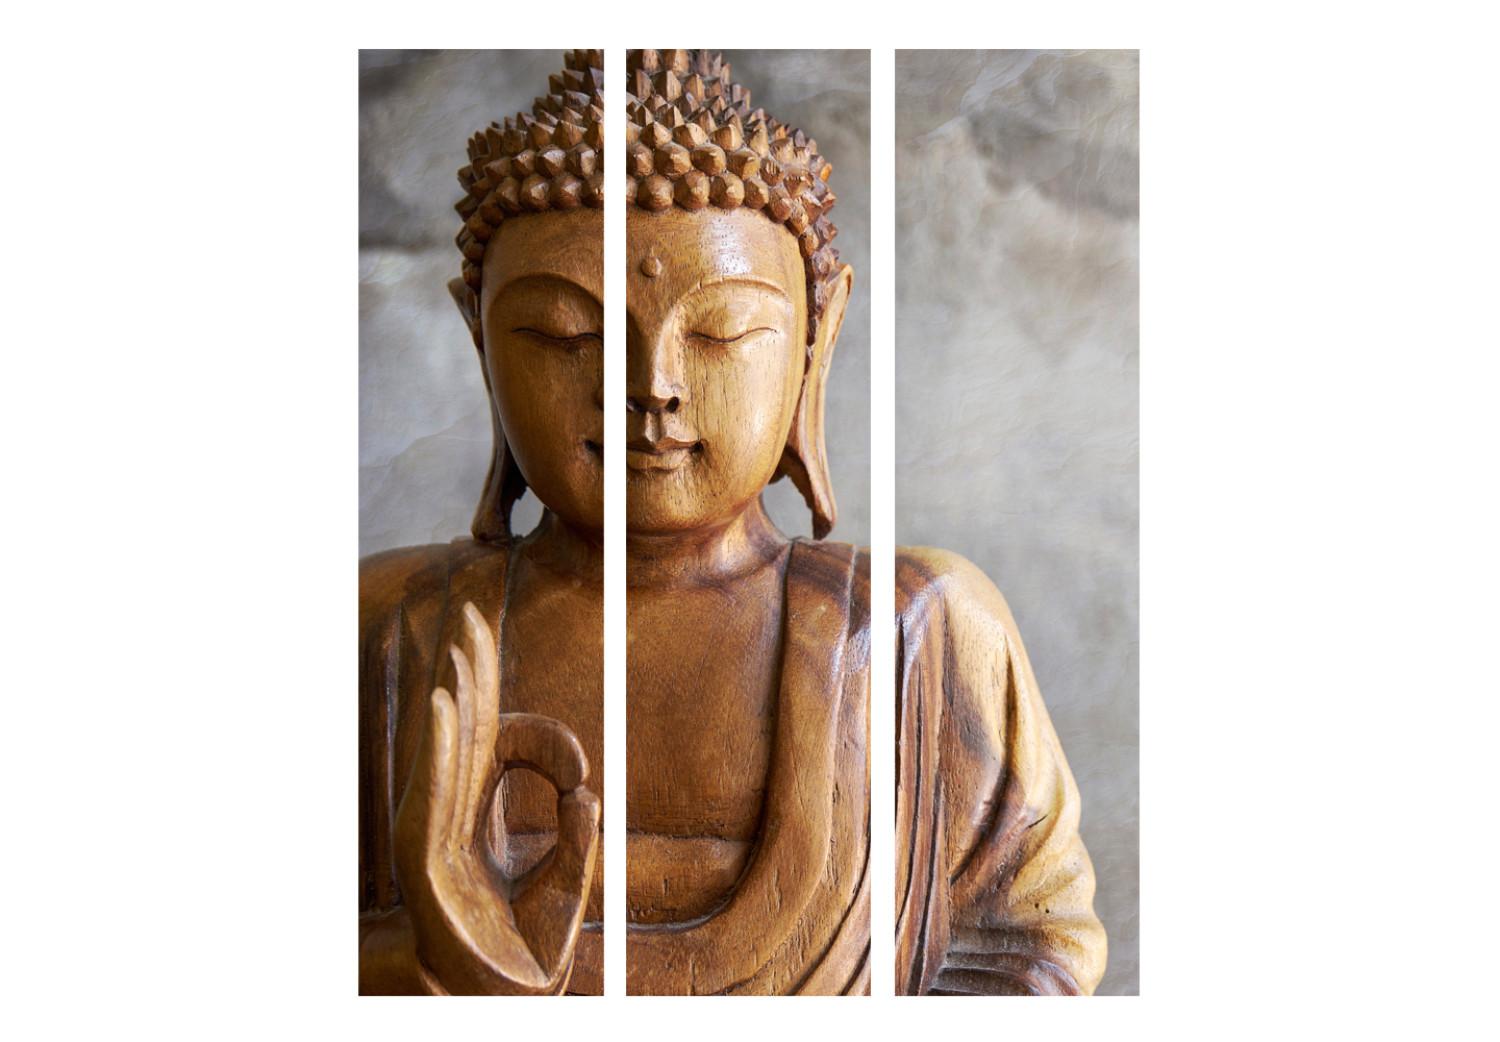 Biombo original Buda - textura de madera de Buda sobre fondo gris en estilo oriental